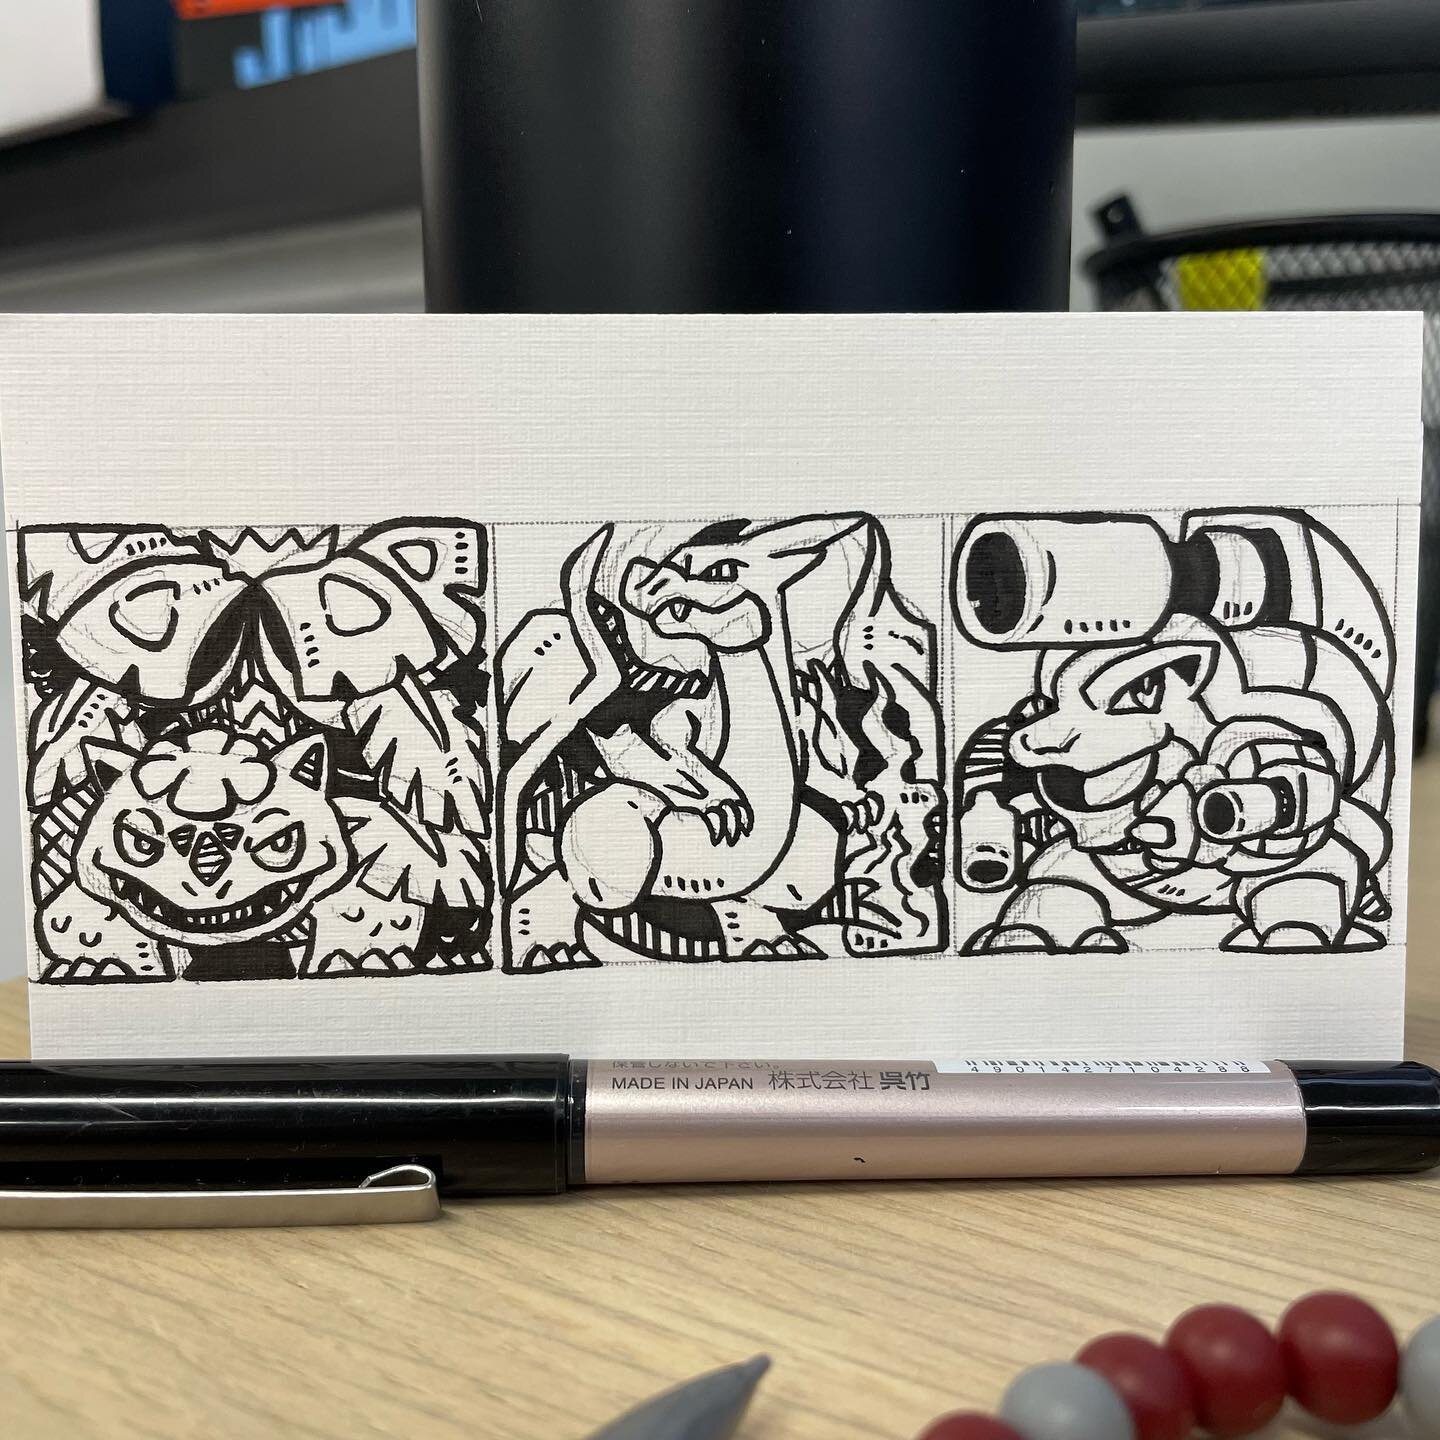 Pokemon Square Progress Dump

#Pokemon #PokemonFanArt #Sketch #Ink #Illustration